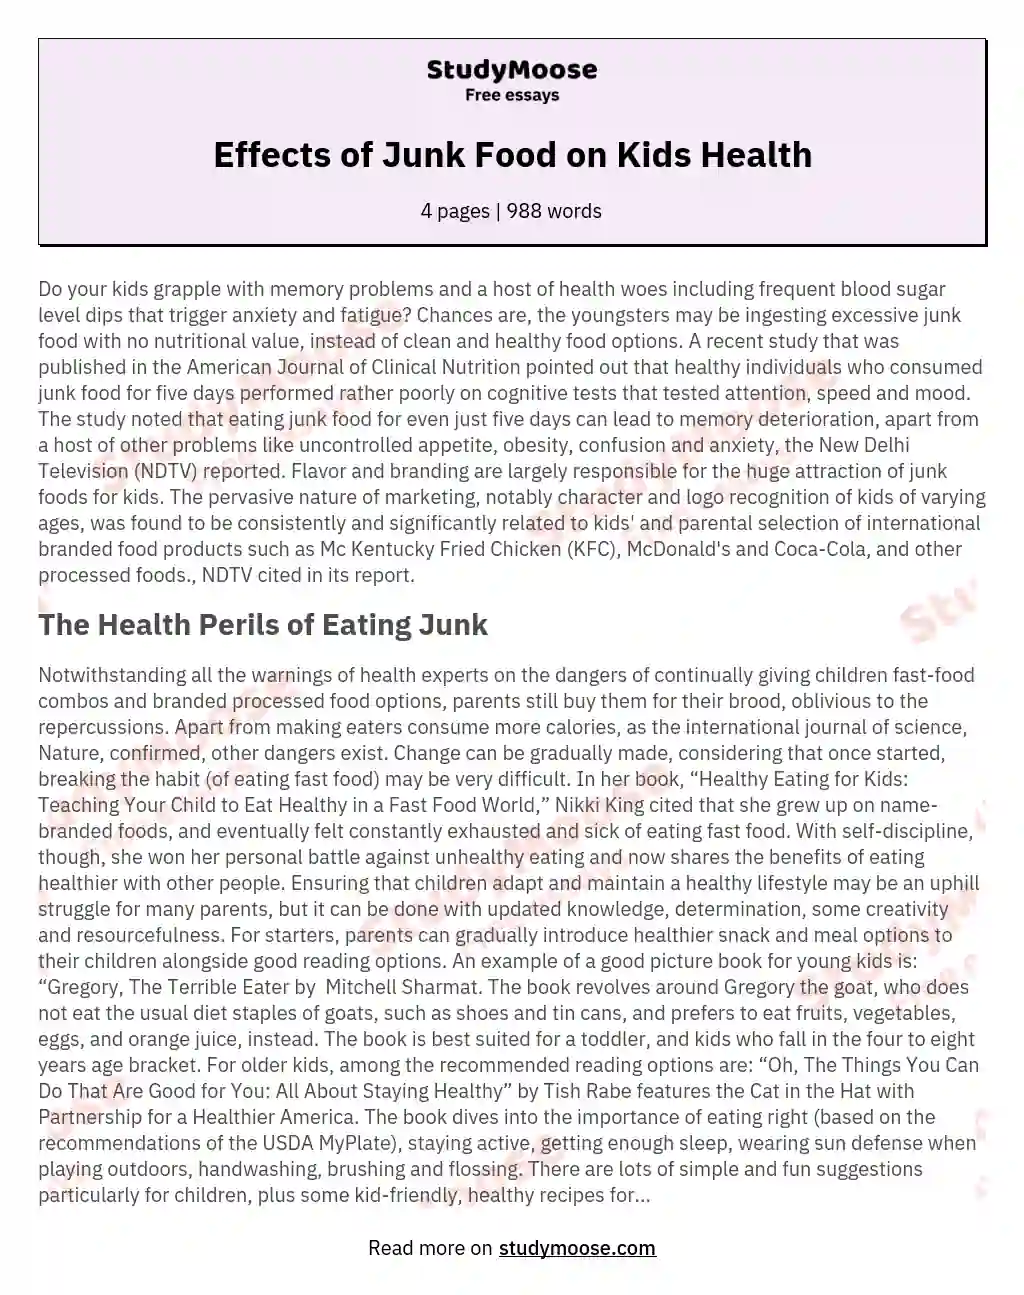 Effects of Junk Food on Kids Health essay